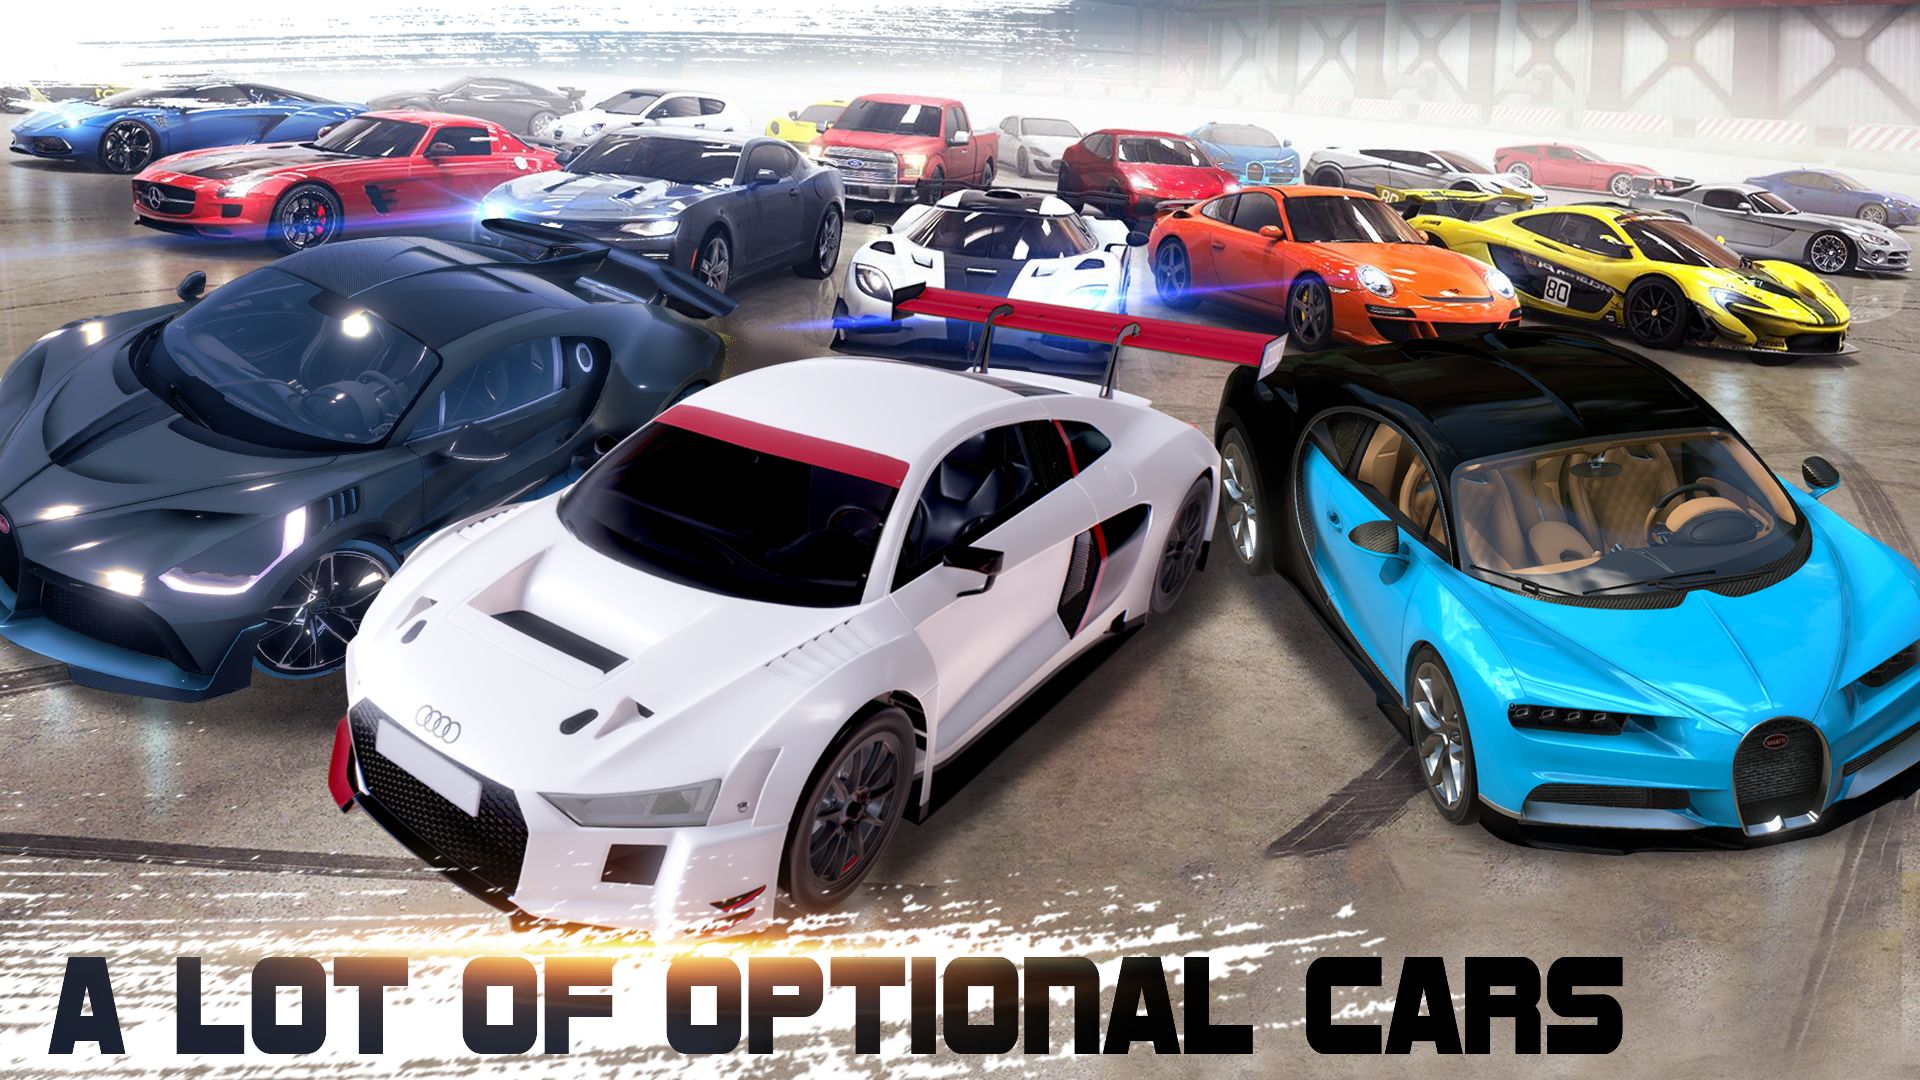 Screenshot of Furious Speed Chasing - Highway car racing game